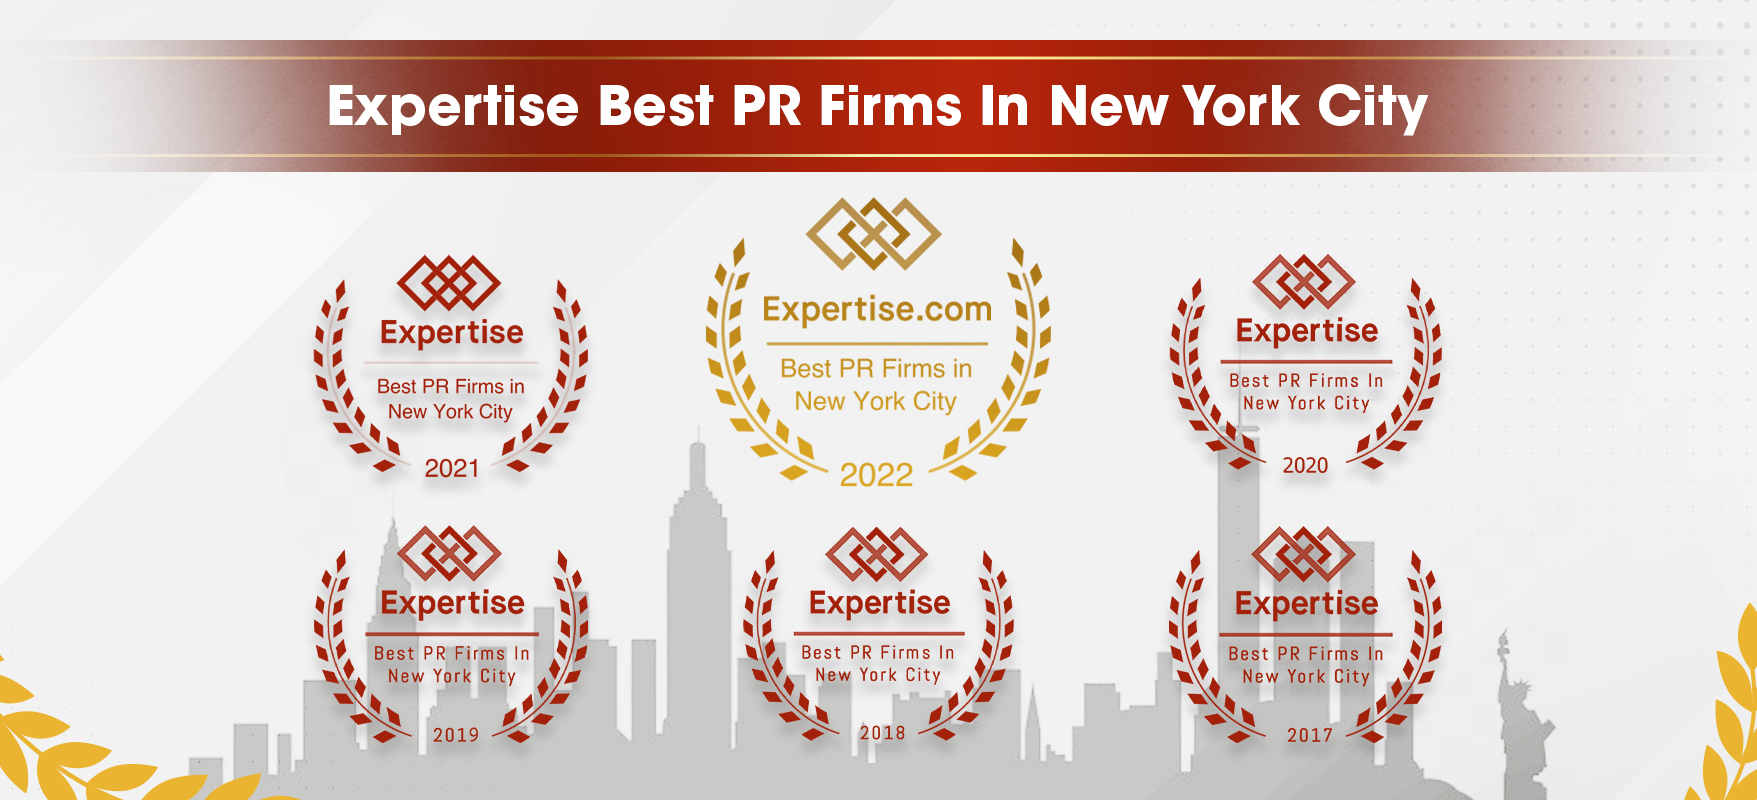 Expertise Best PR Firms In New York City